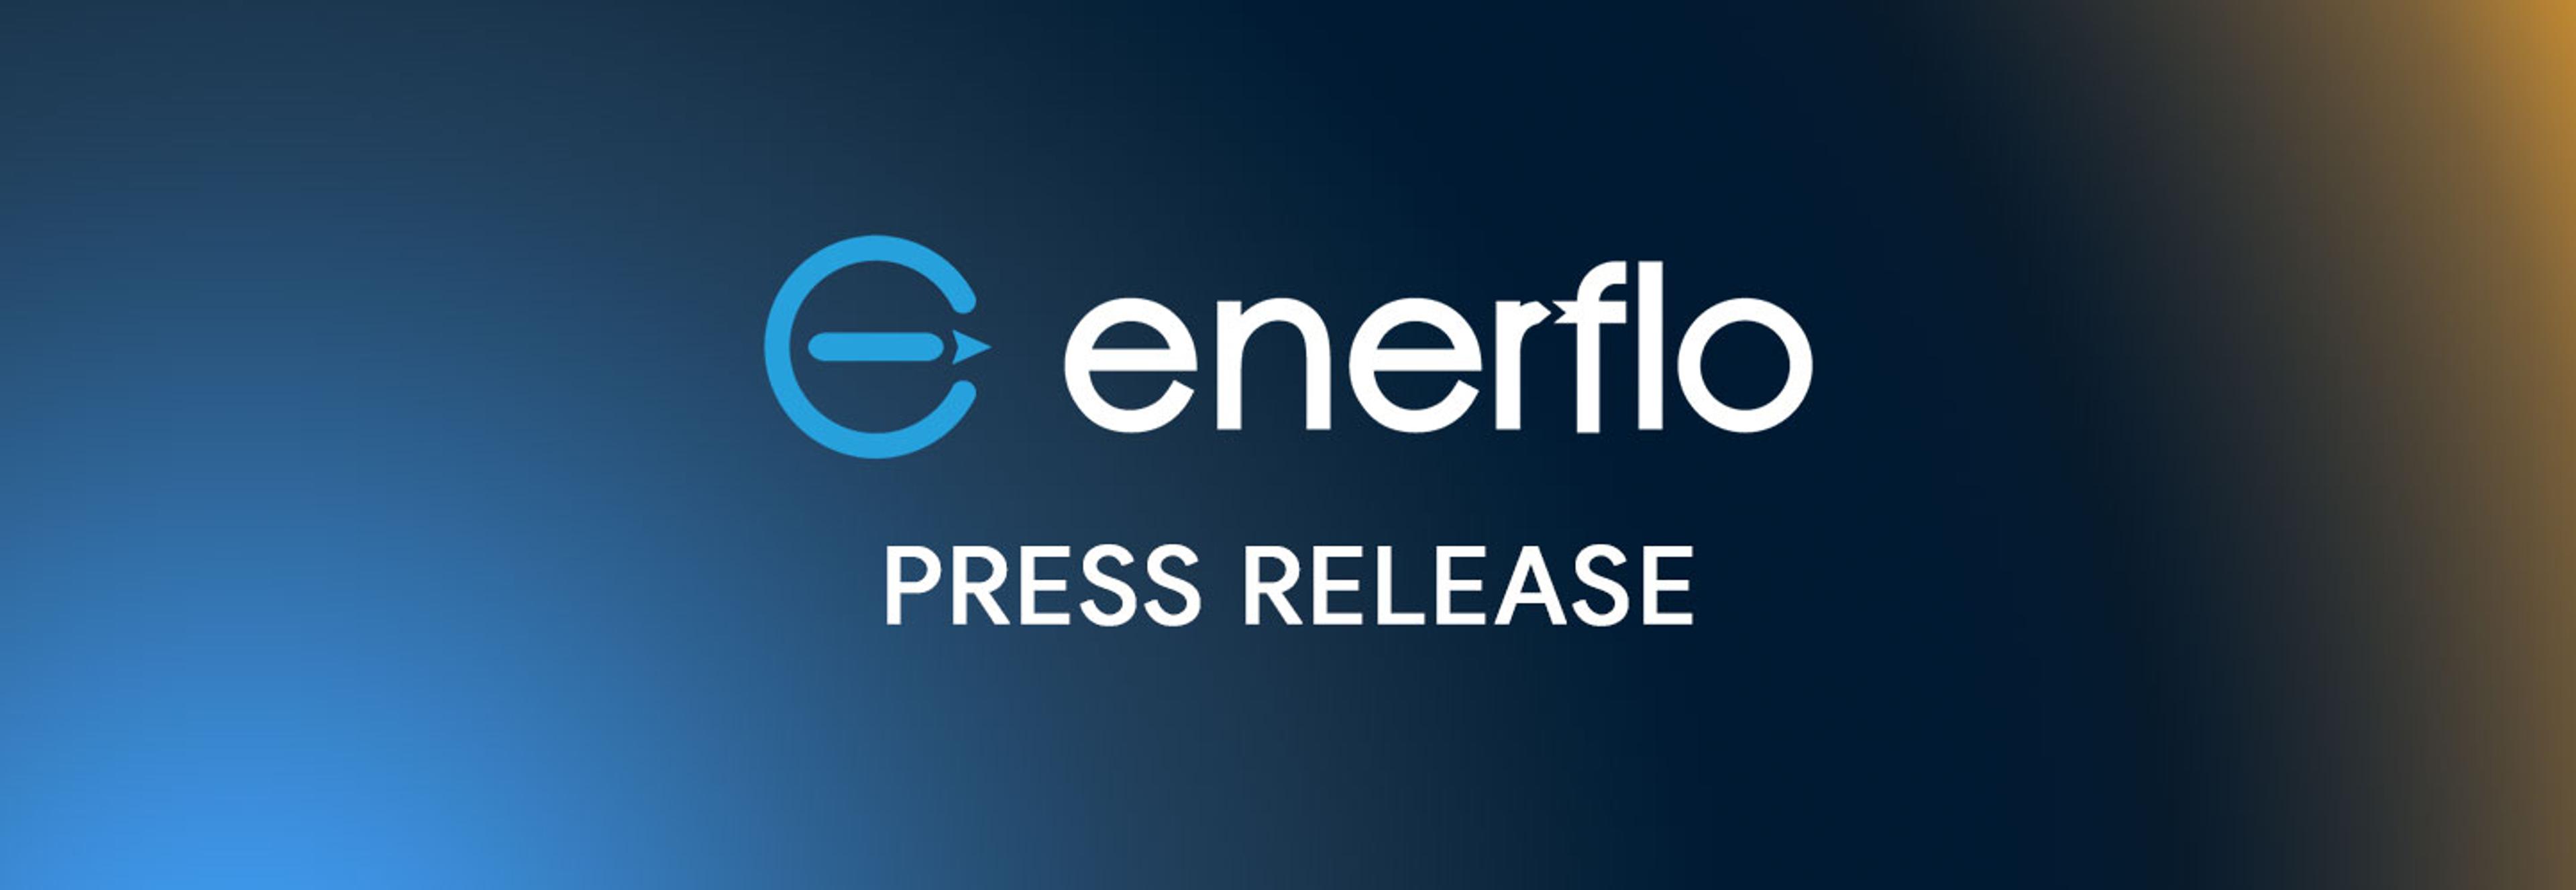 Enerflo Press Release.